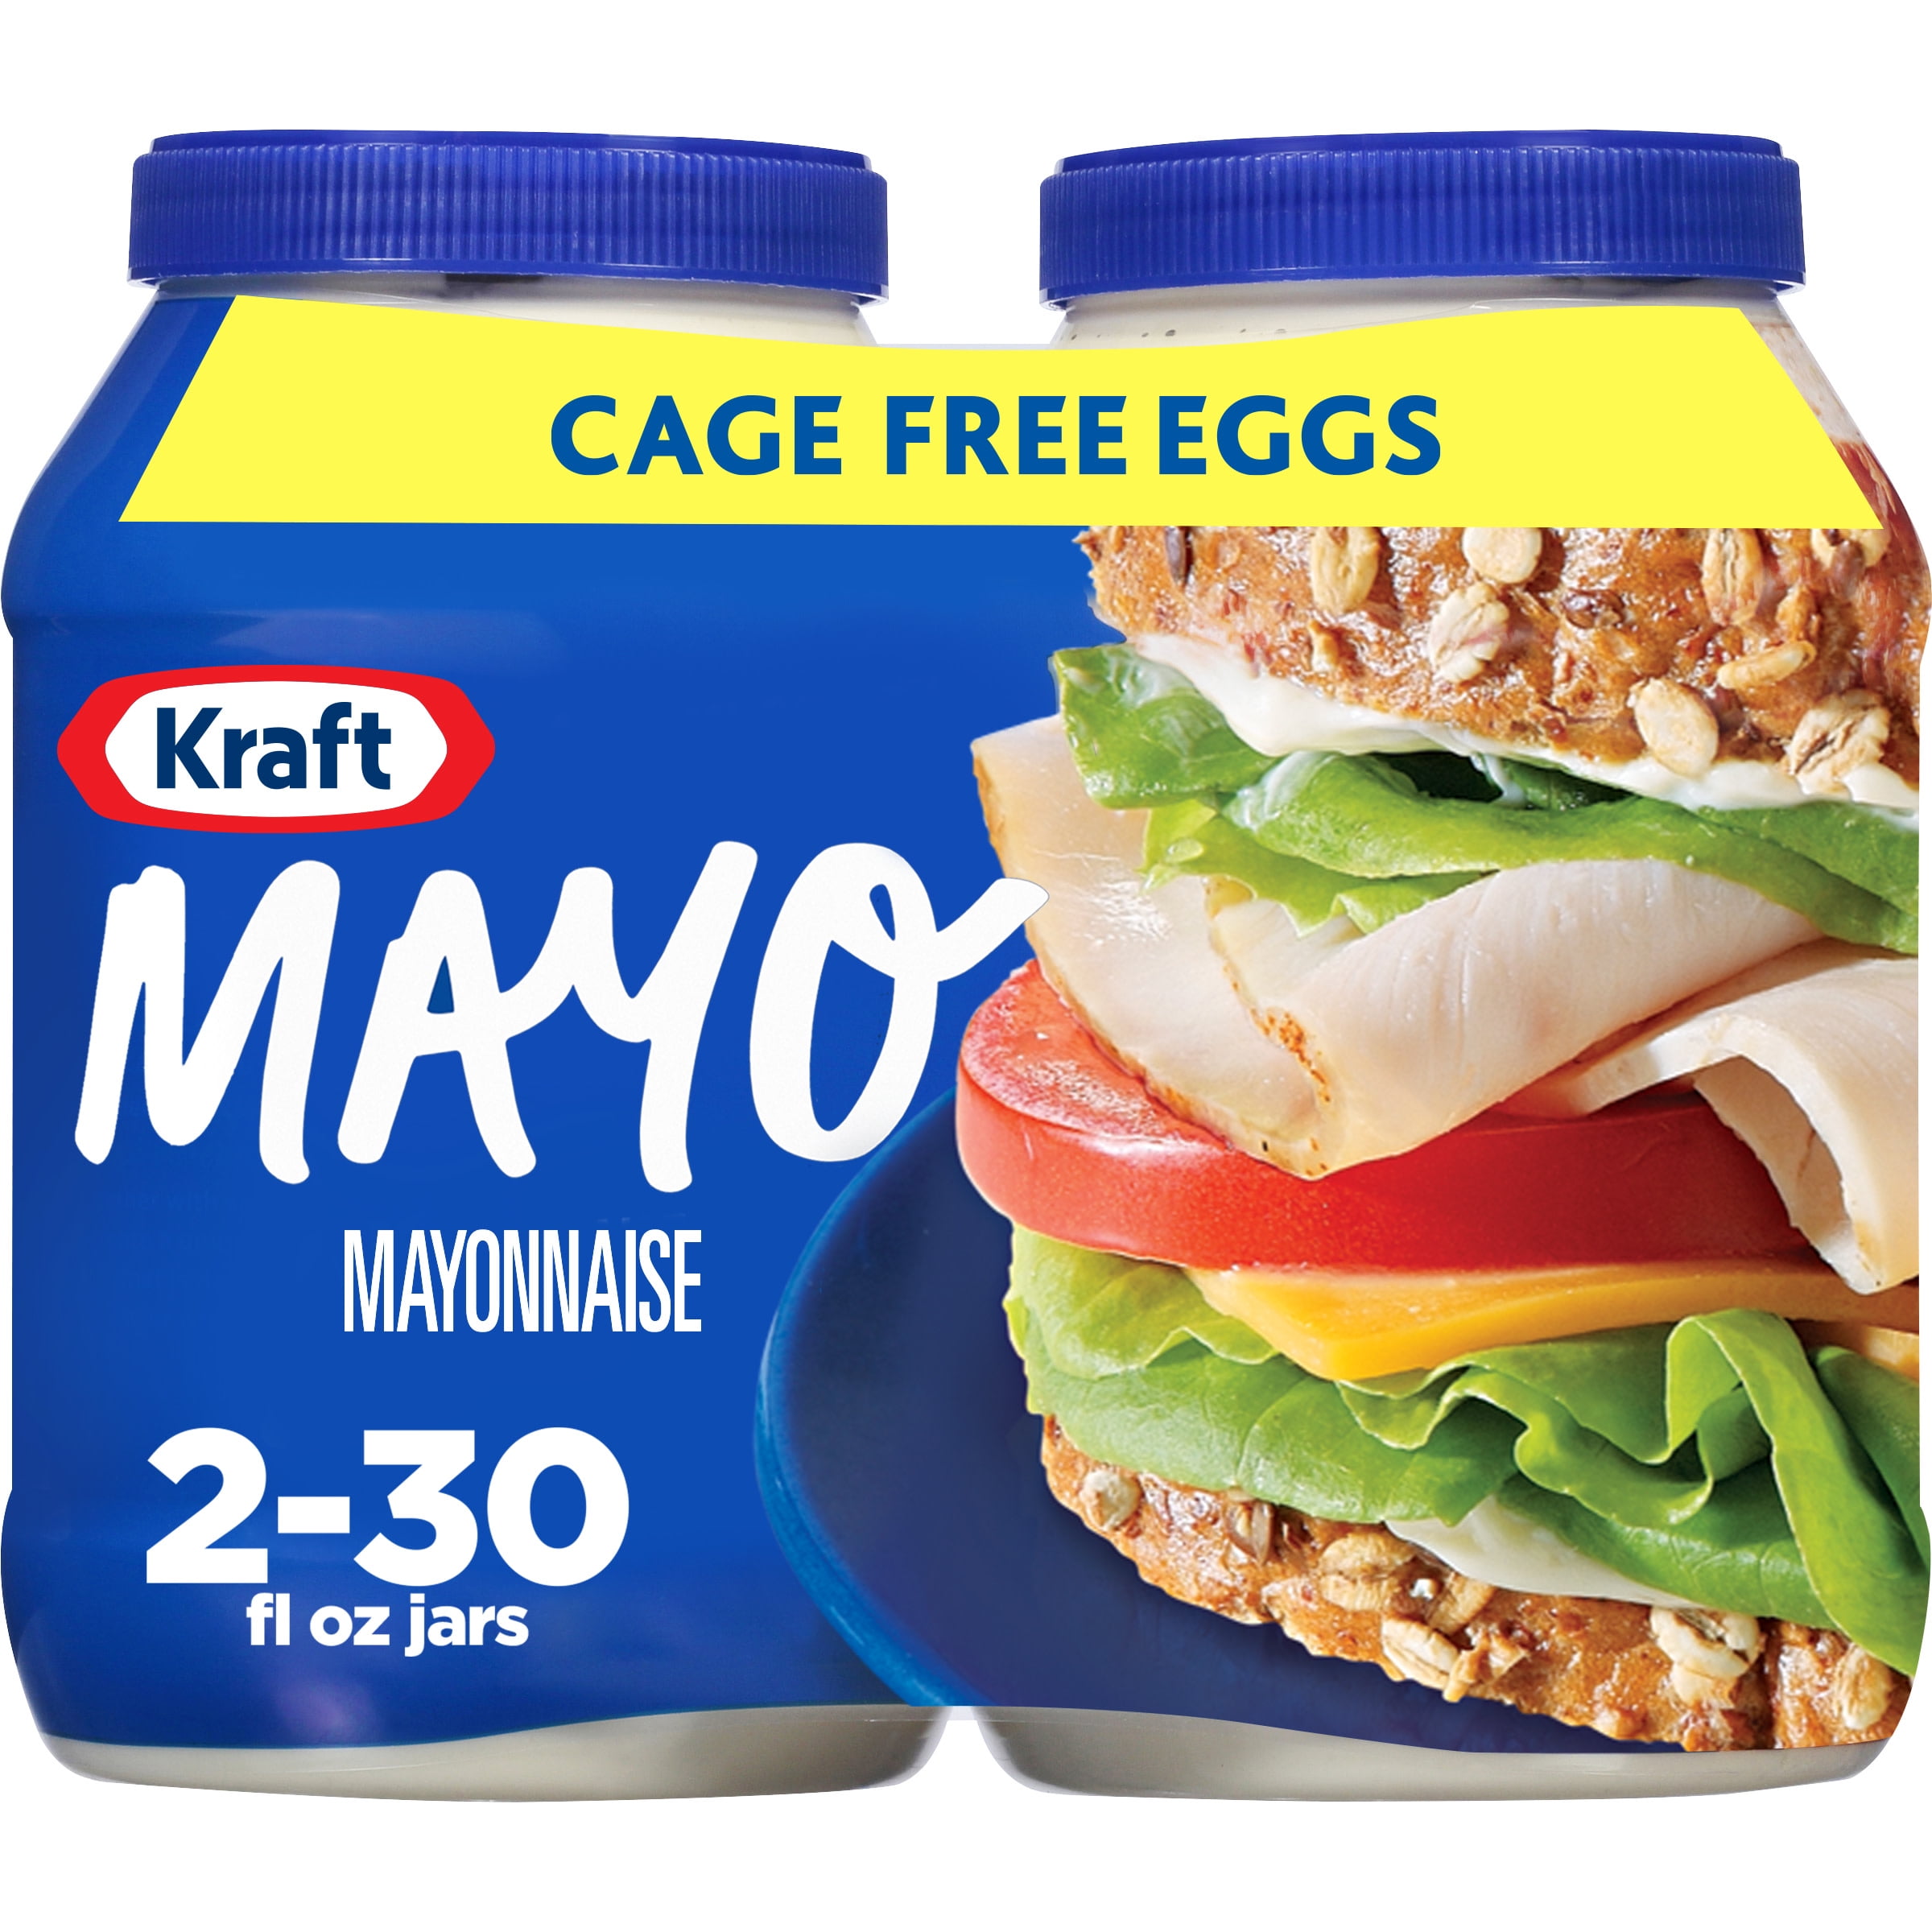 Is Kraft Mayonnaise Keto Friendly?